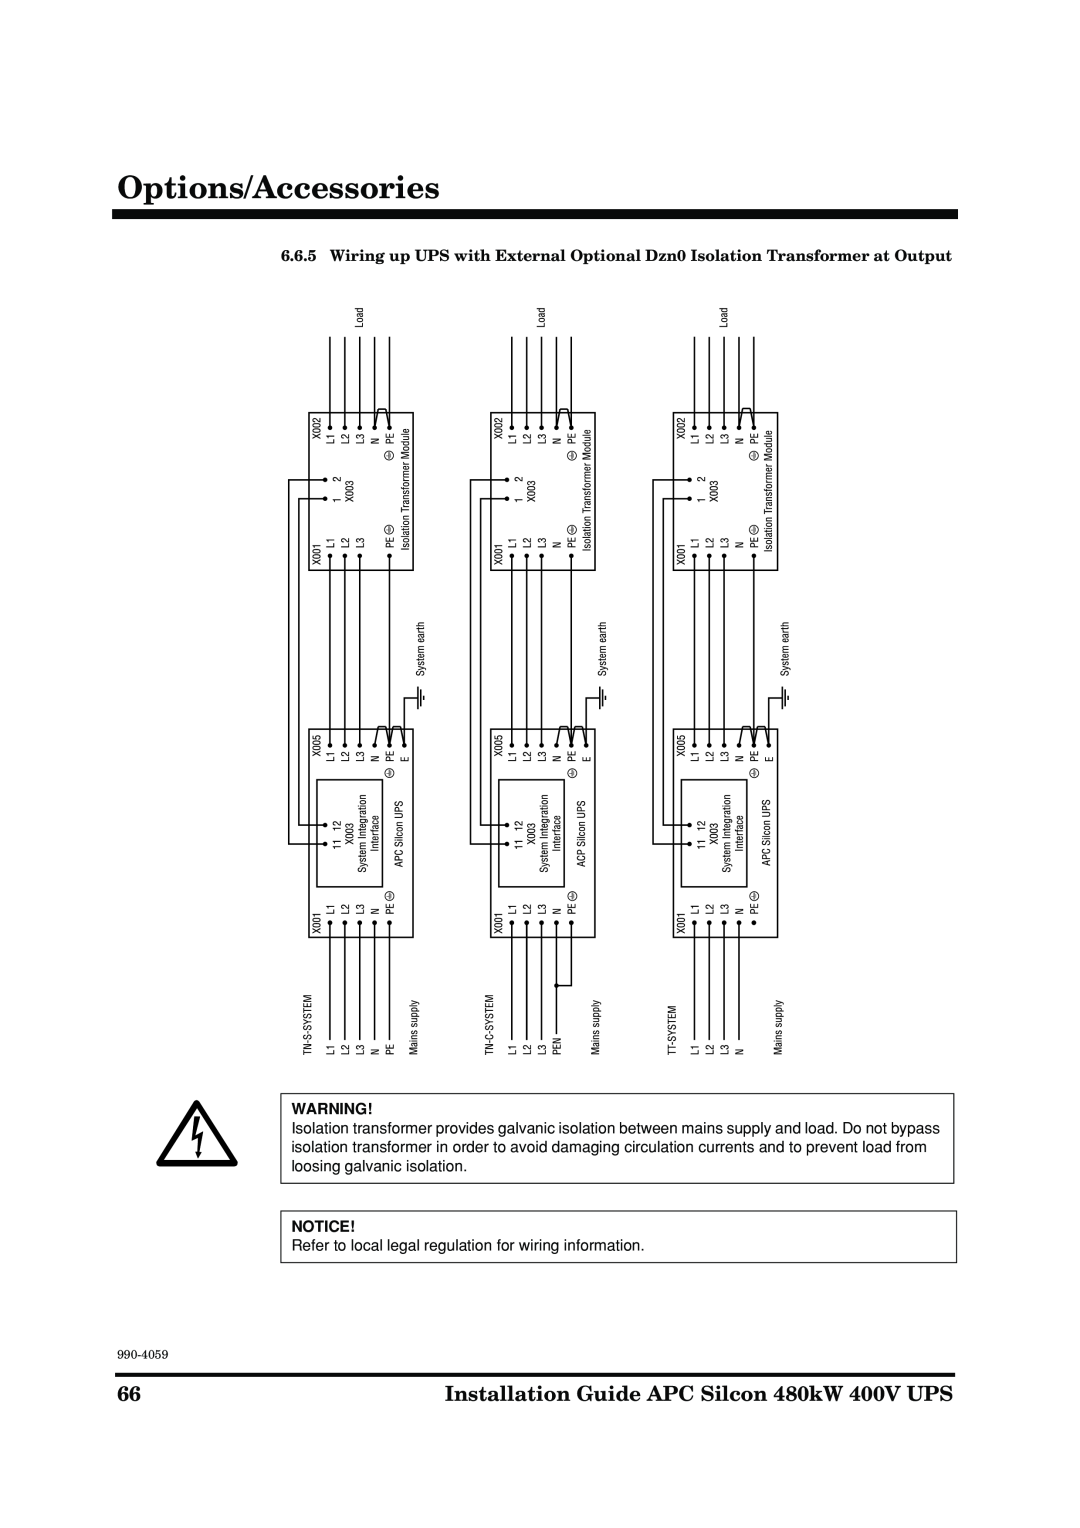 American Power Conversion manual Options/Accessories, Installation Guide APC Silcon 480kW 400V UPS 